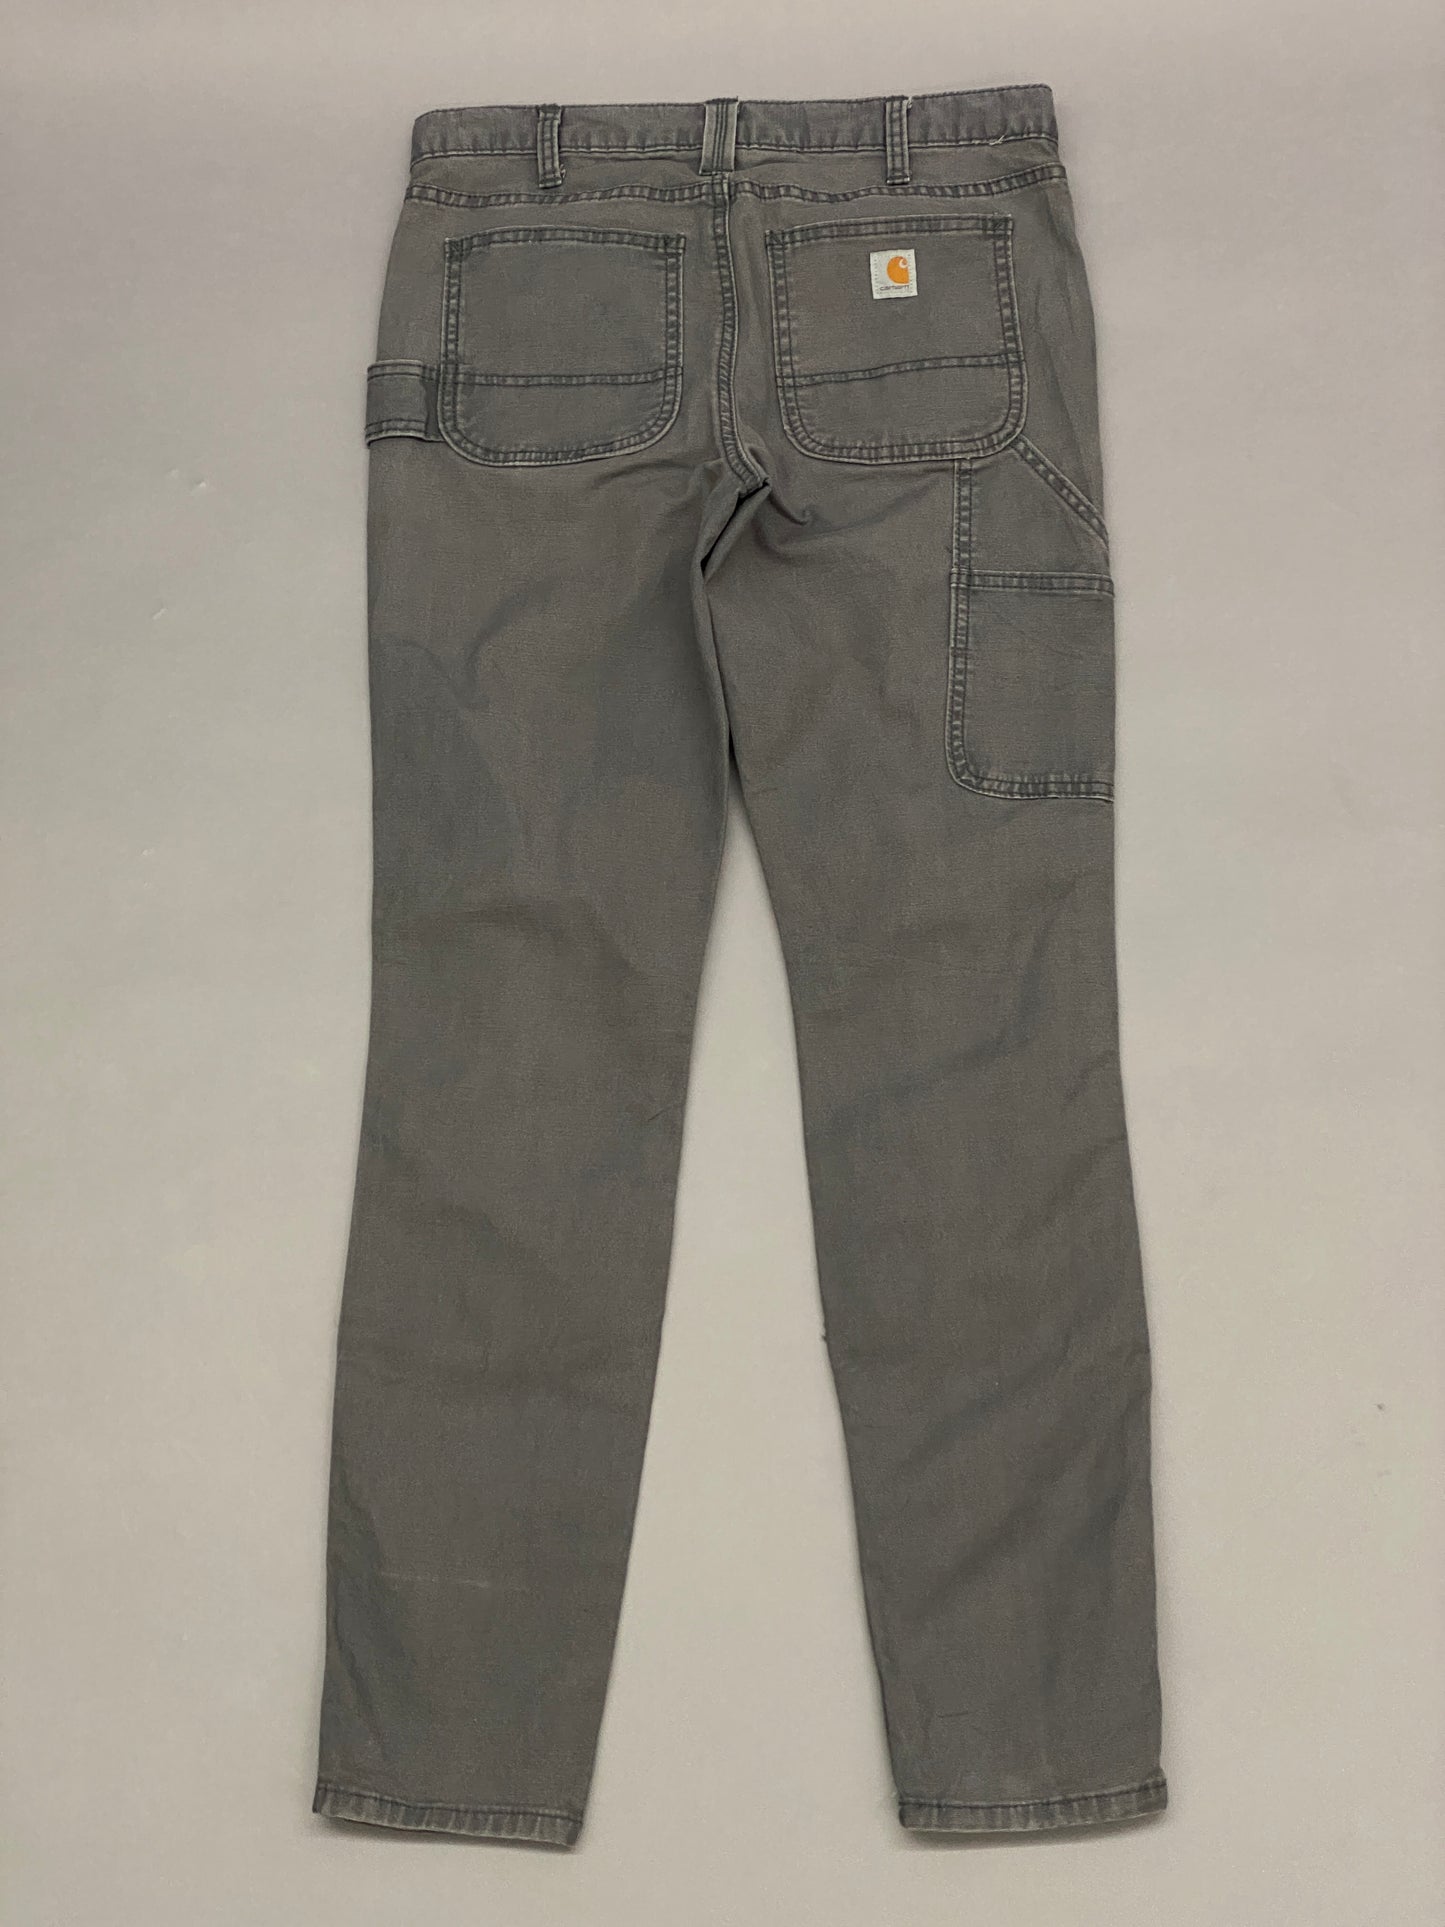 Double Knee Carhartt Jeans - W6 o 31